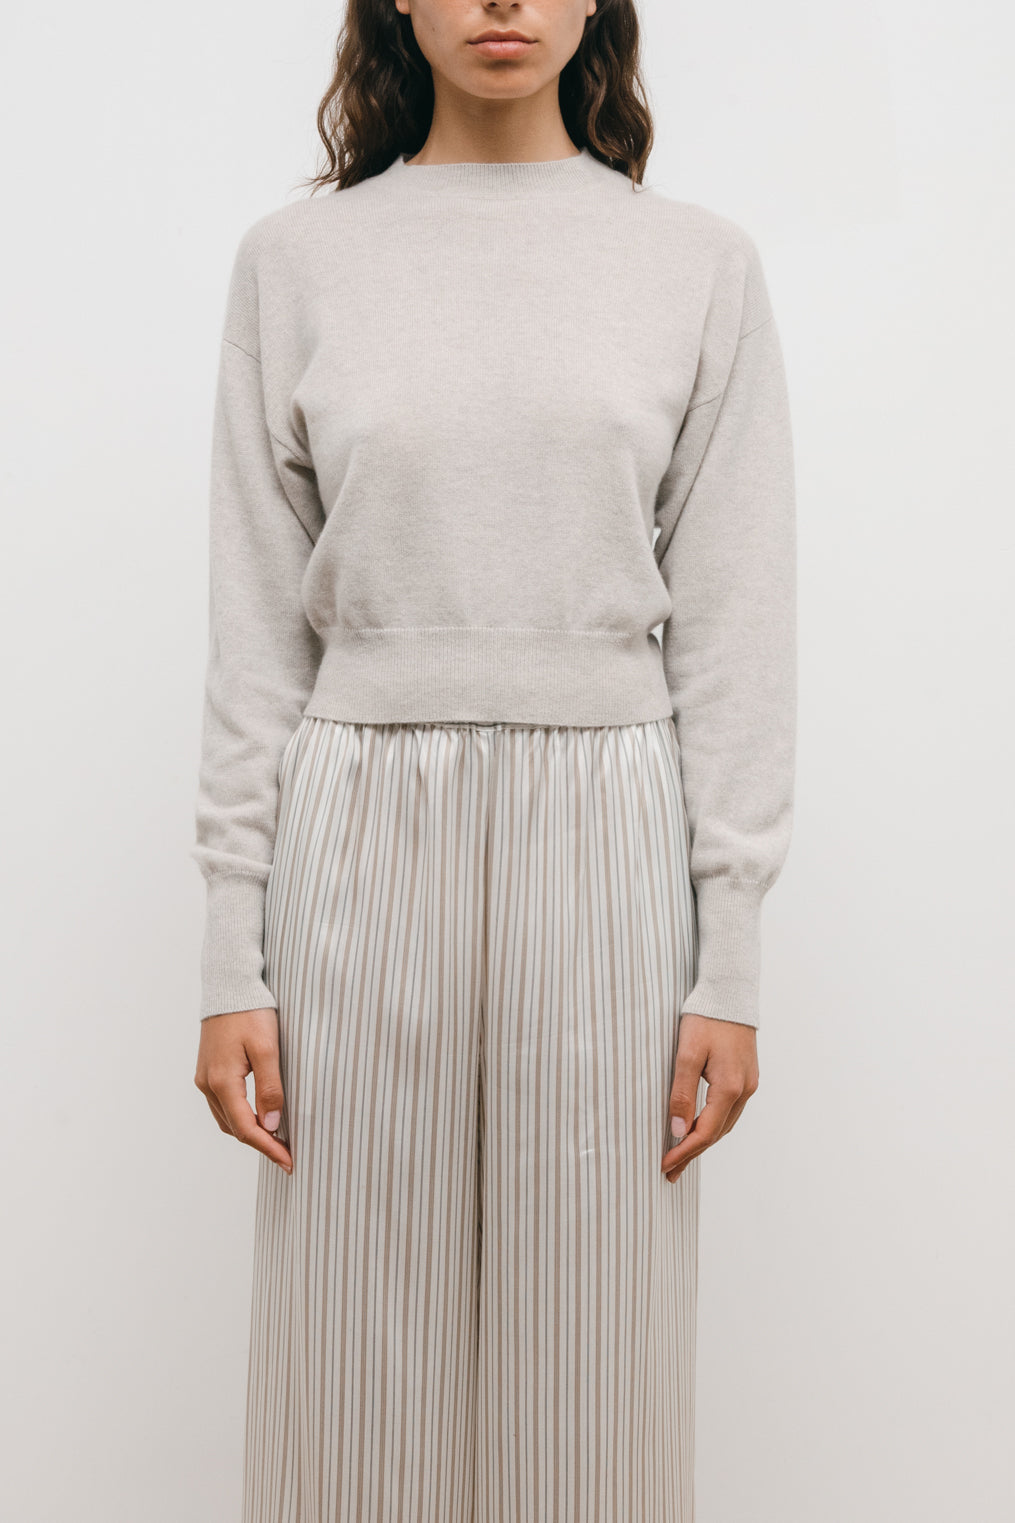 MENORCA cashmere sweater